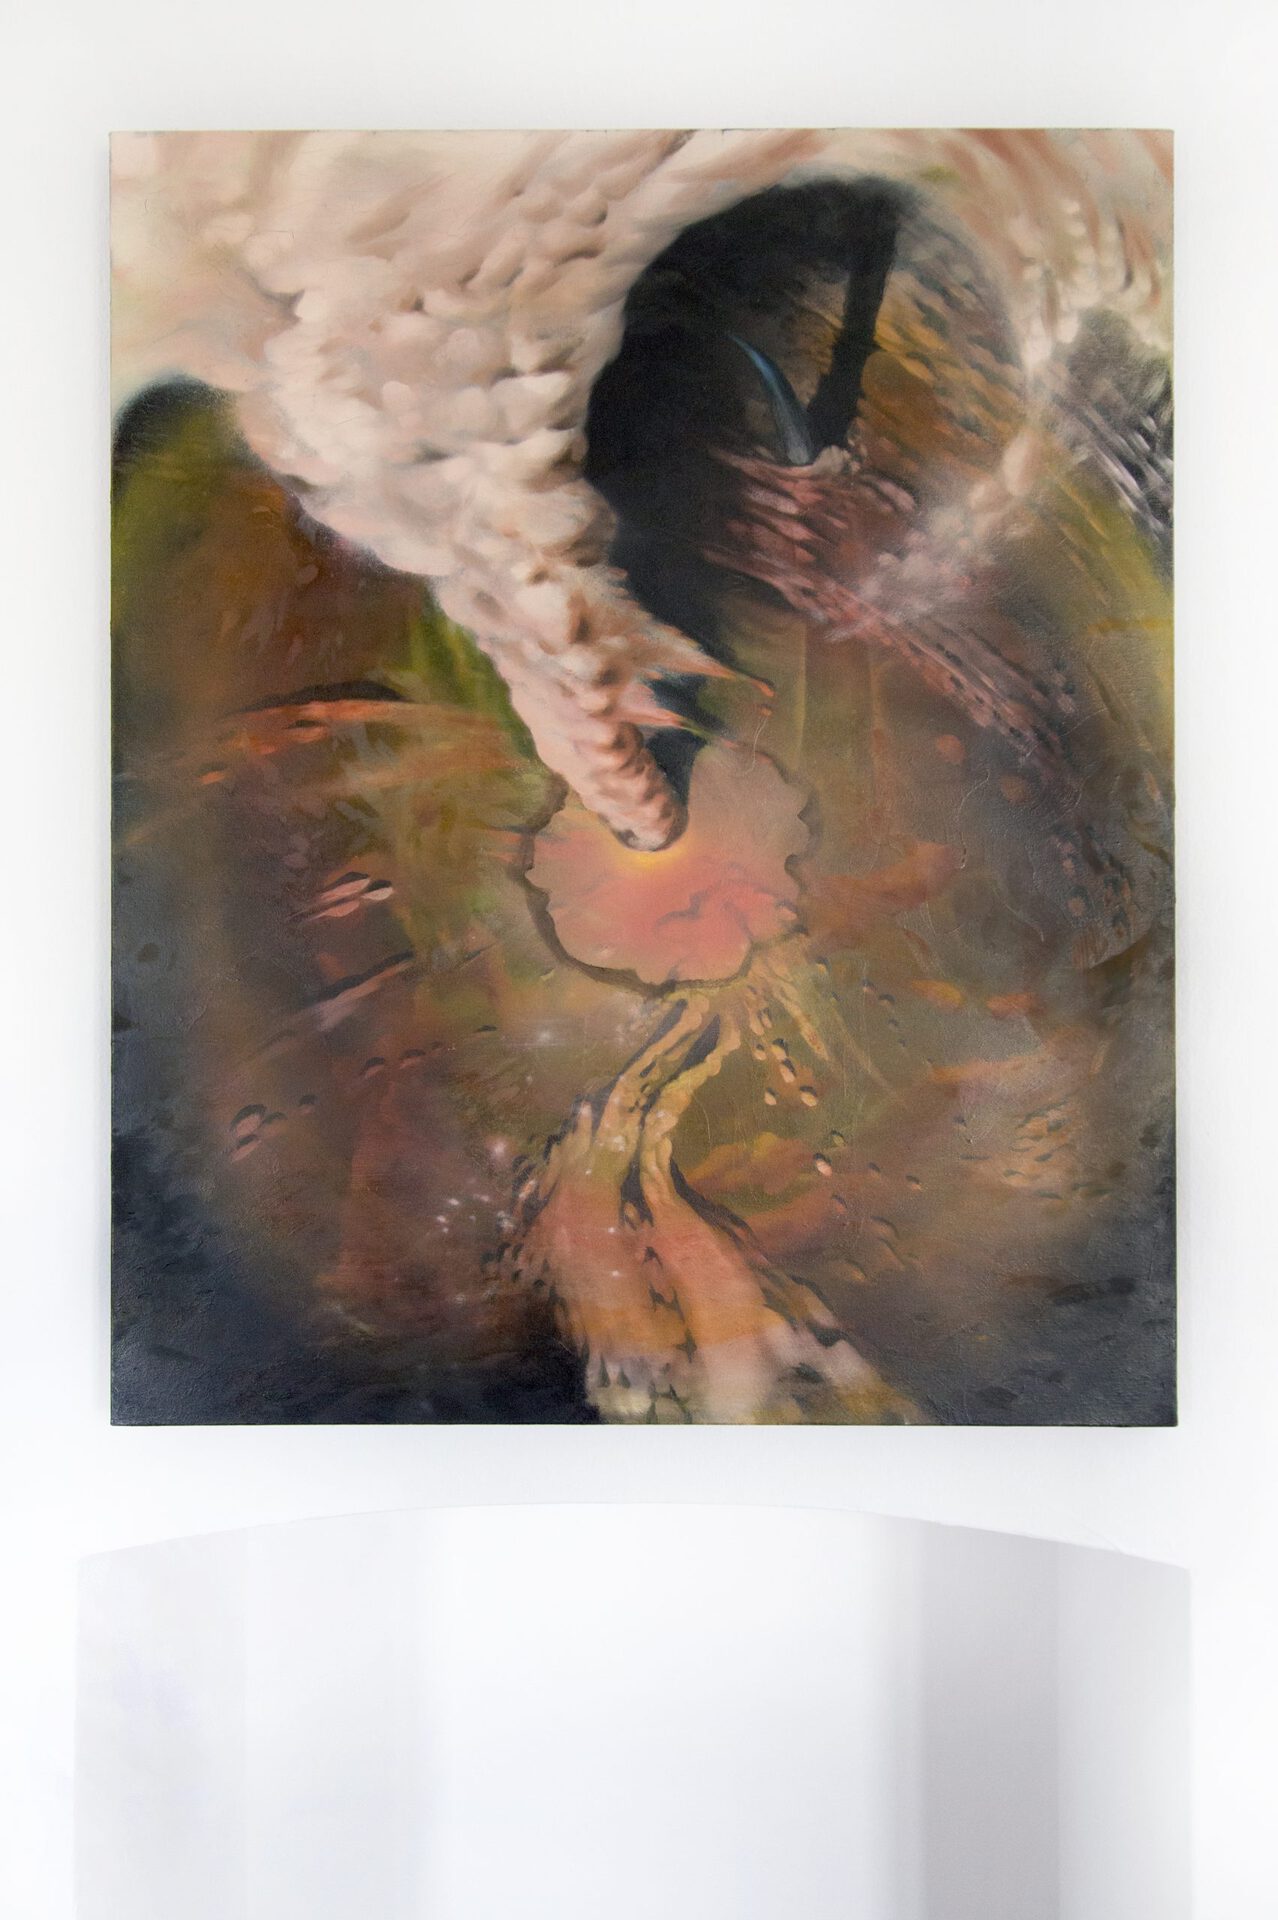 Diego Gualandris Arcipelago (serie) Oil on canvas 2020 100x80cm courtesy ADA, Rome